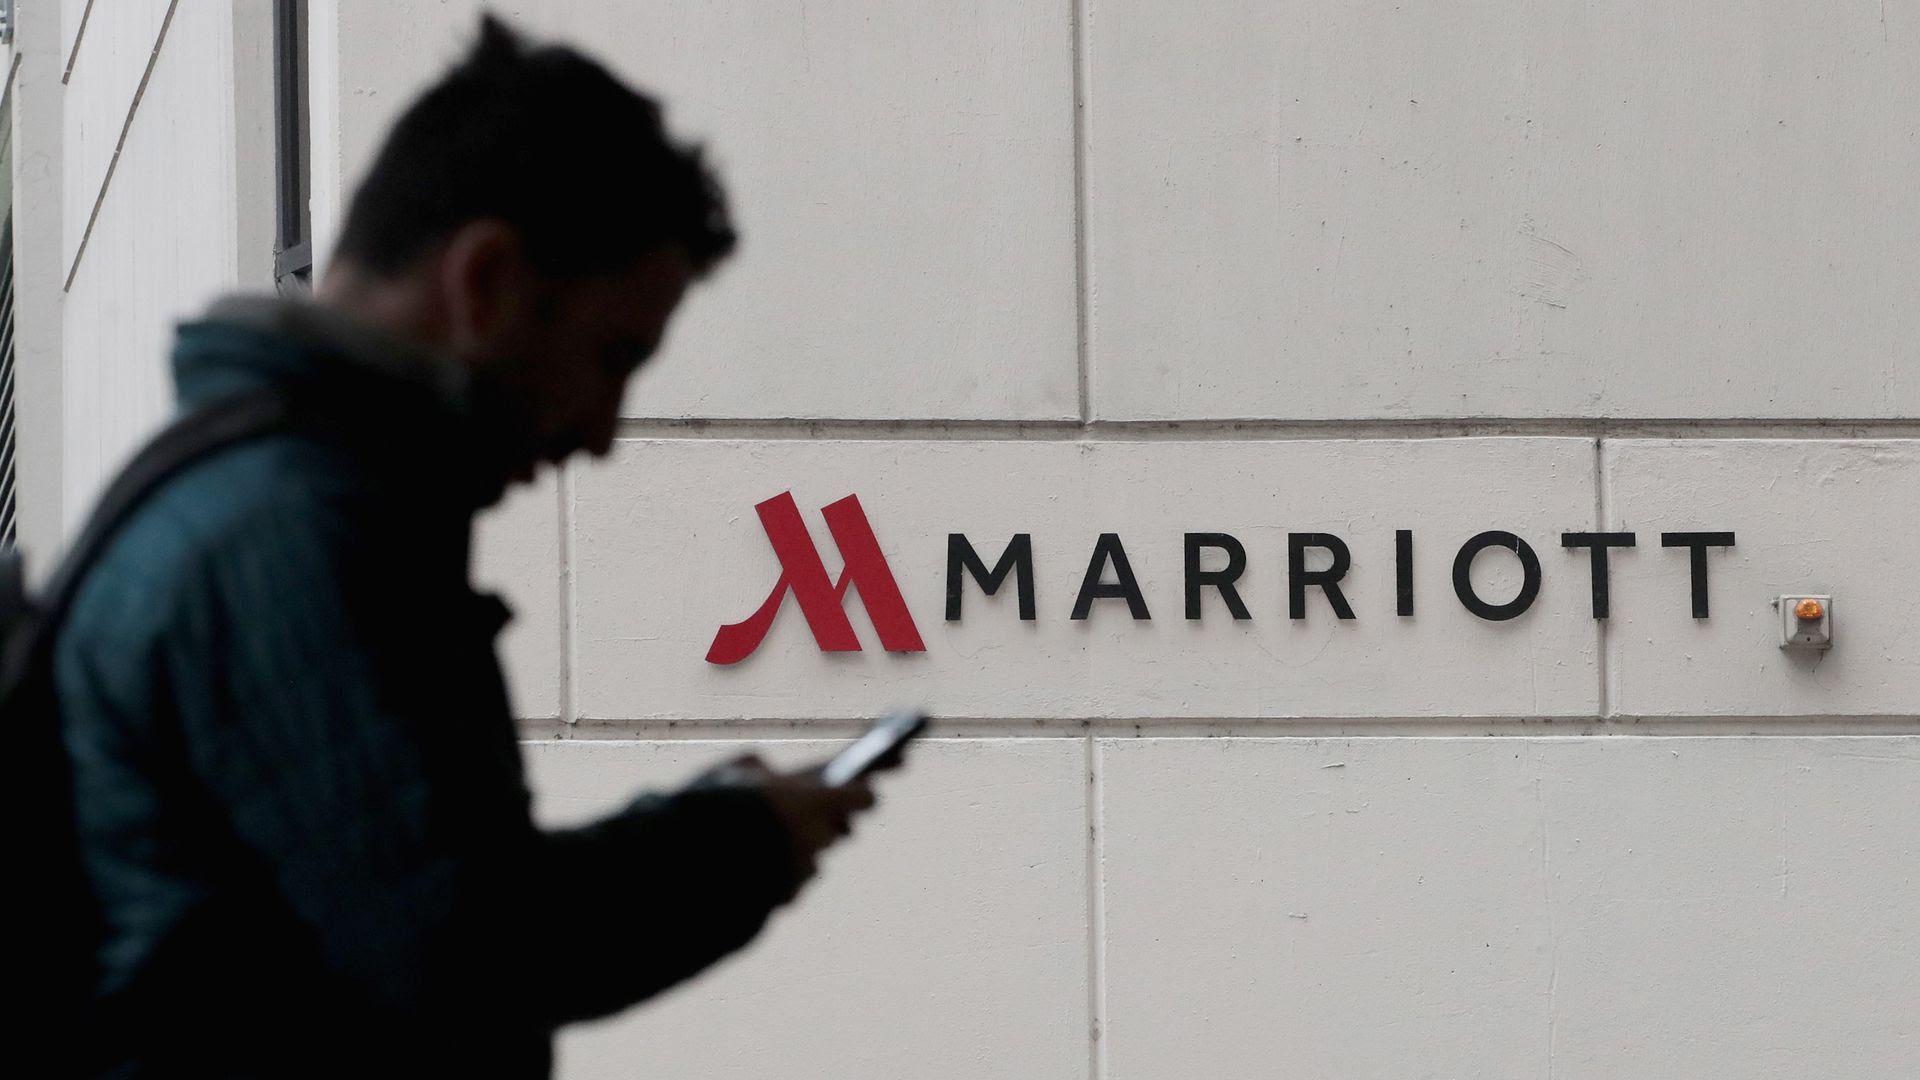 A man walks by the Marriott logo